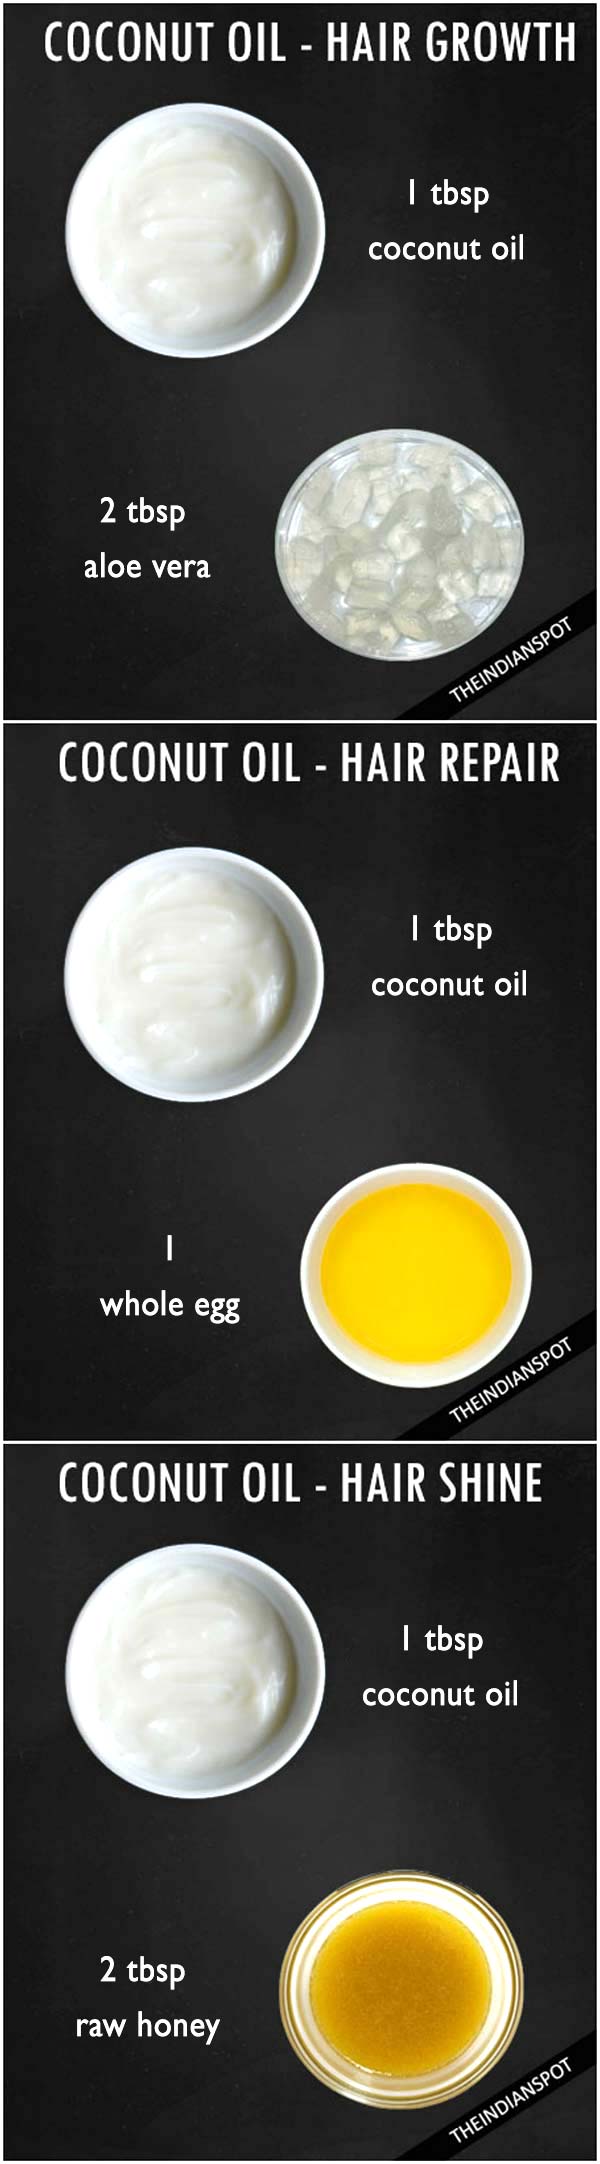 5 Best Diy Coconut Oil Hair Treatments - Hair Masks For Growth And Repair Diy